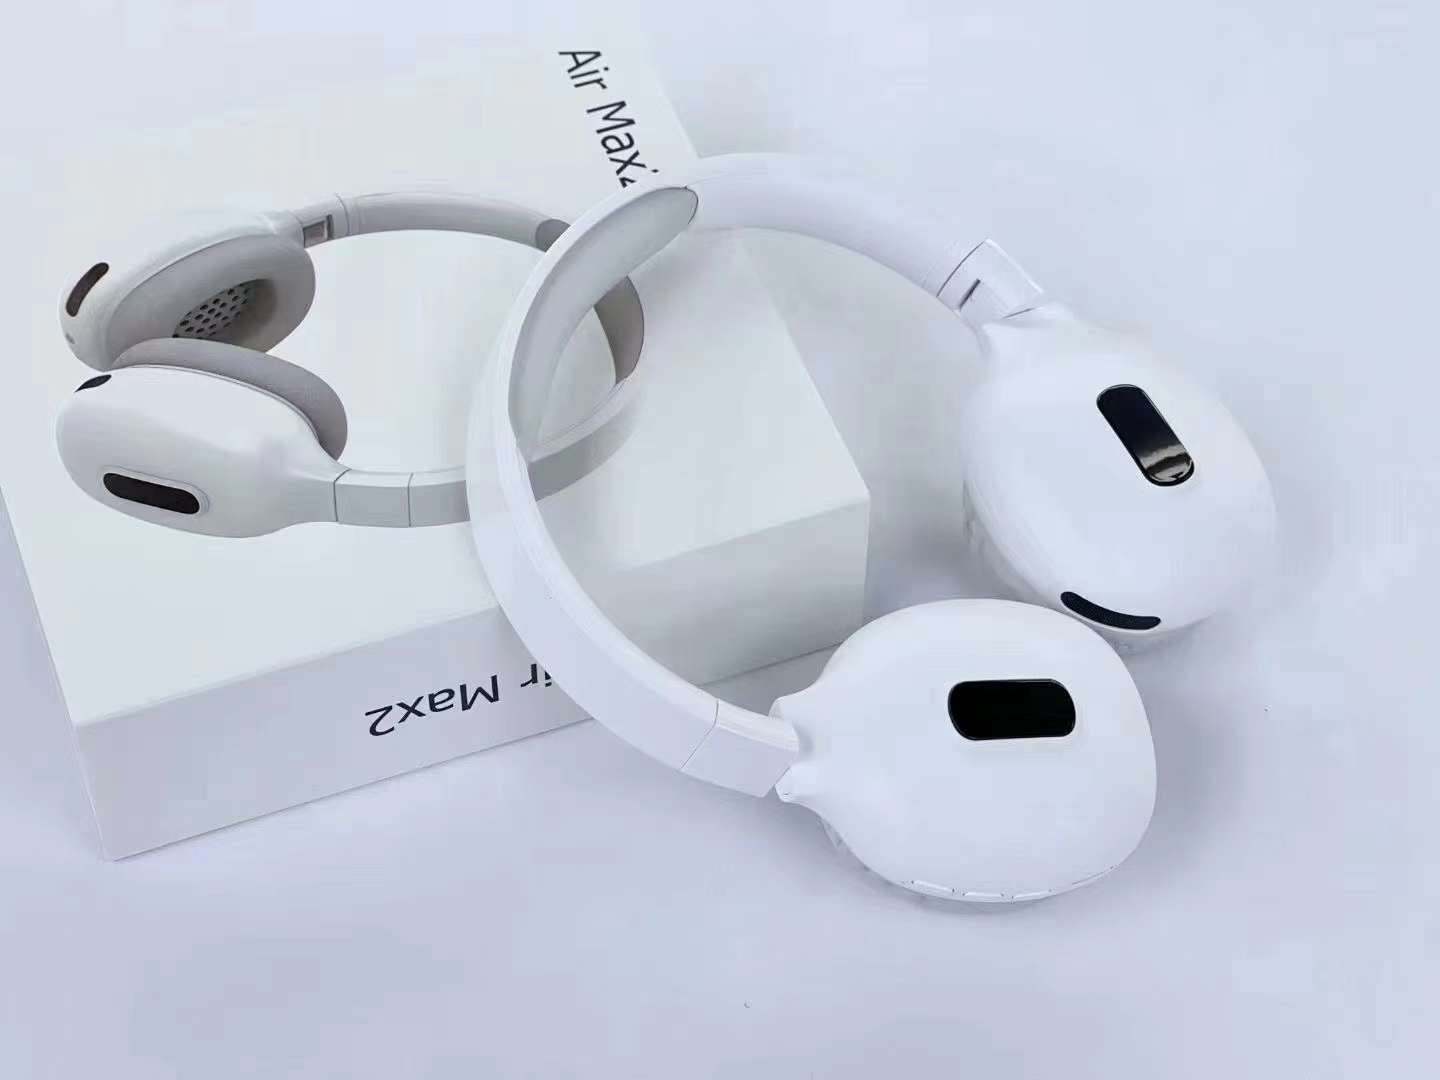 Air Max 2 Wireless Bluetooth Headphone